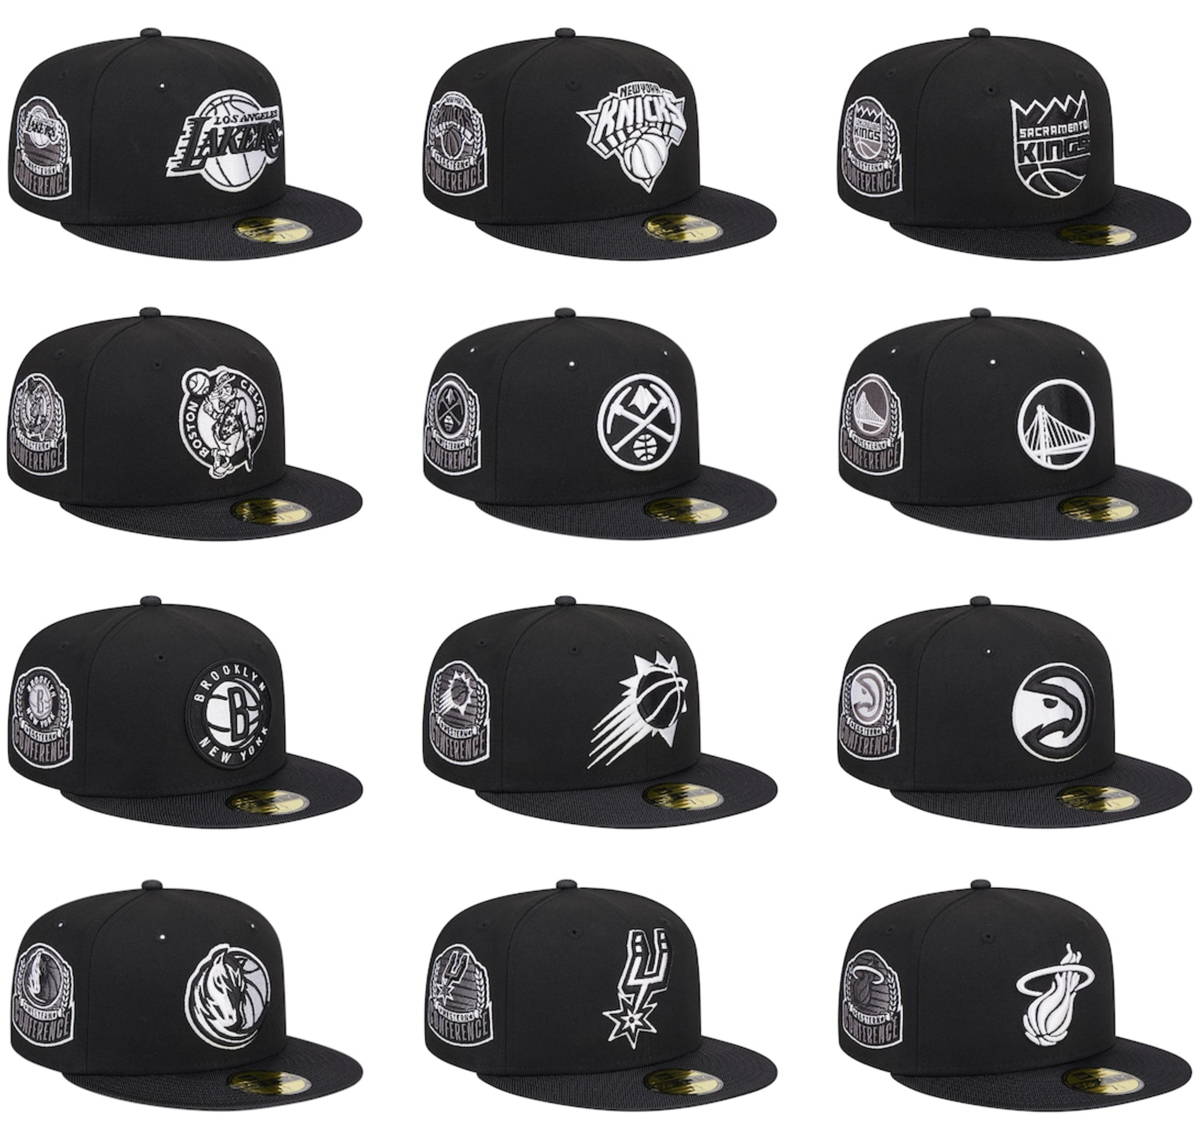 New-Era-NBA-Black-White-Satin-Visor-59fifty-Fitted-Hats